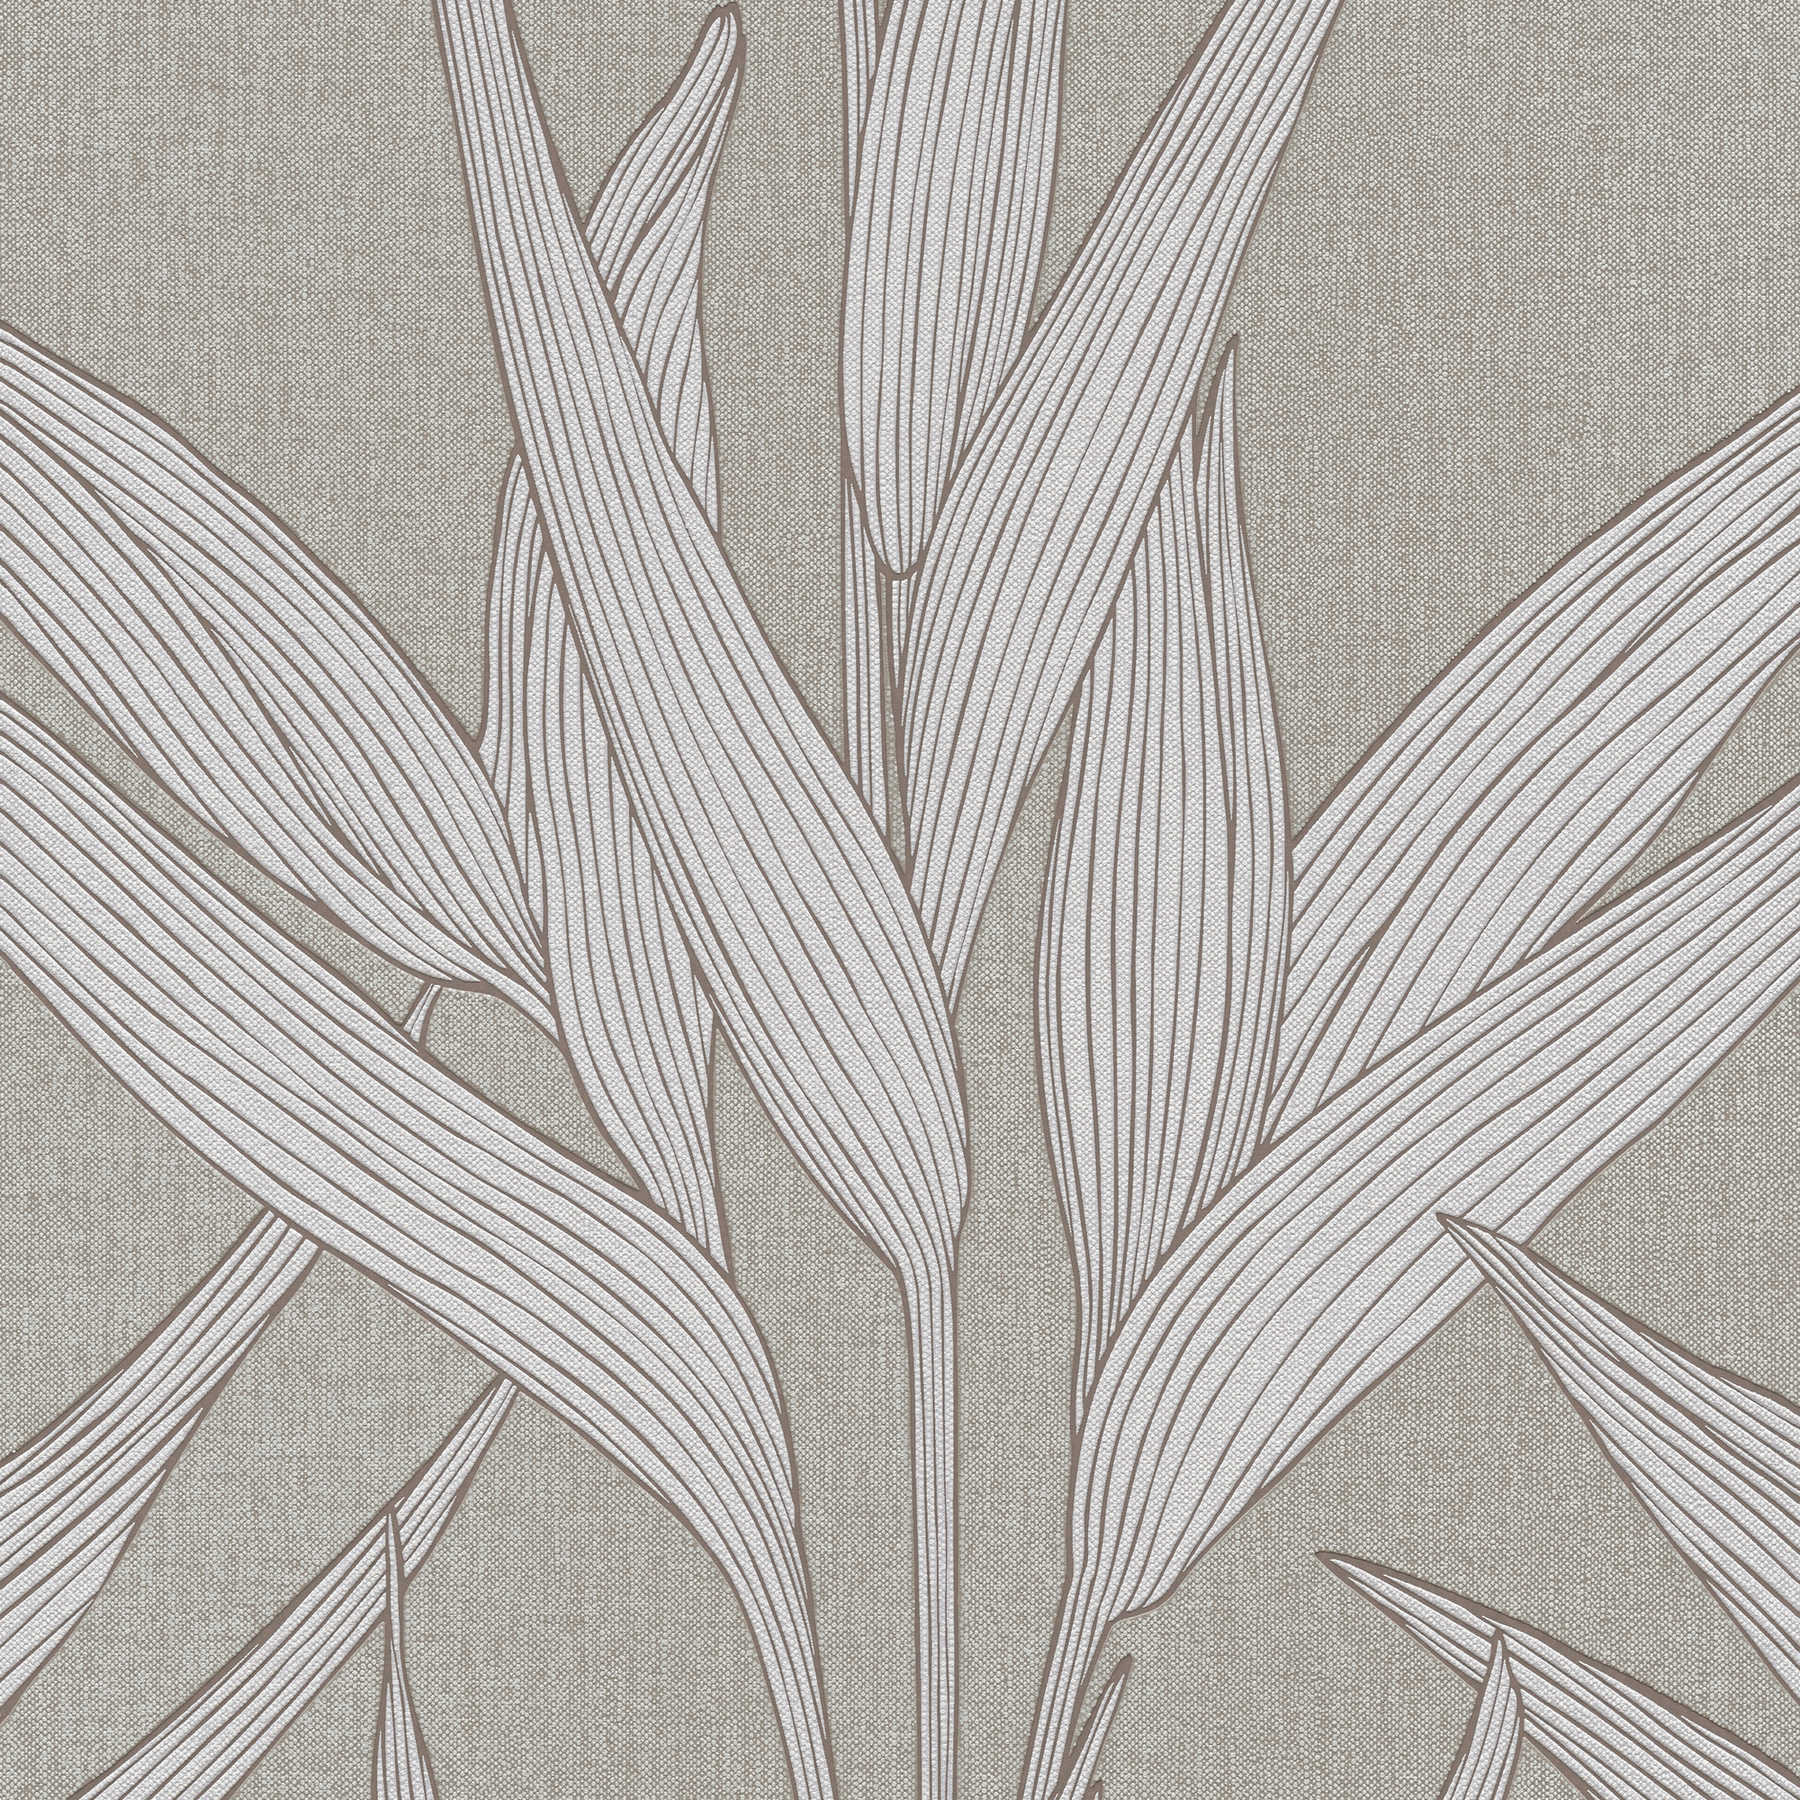 Hygge wallpaper with linen look & leaf pattern - grey
